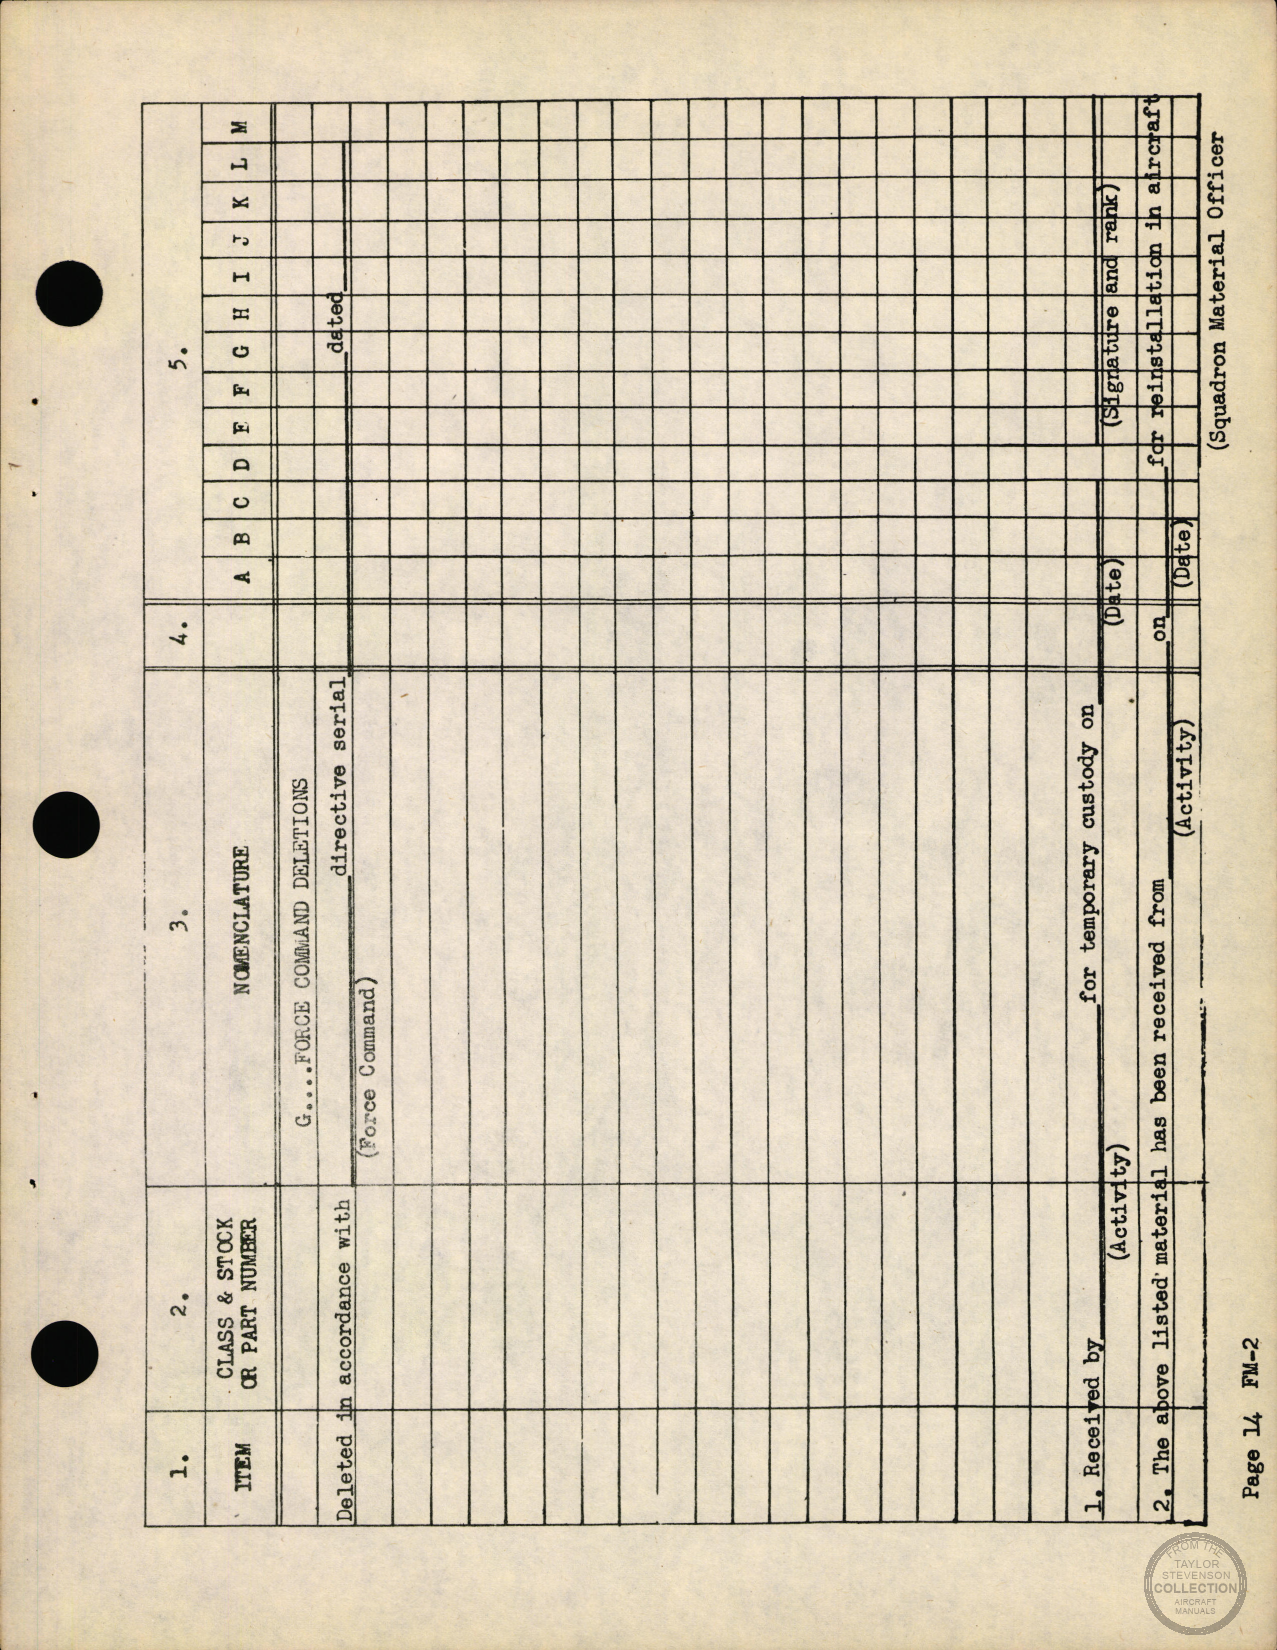 Sample page 19 from AirCorps Library document: Bureau of Aeronautics Standard Inventory Log set (2), FM-2 Wildcat